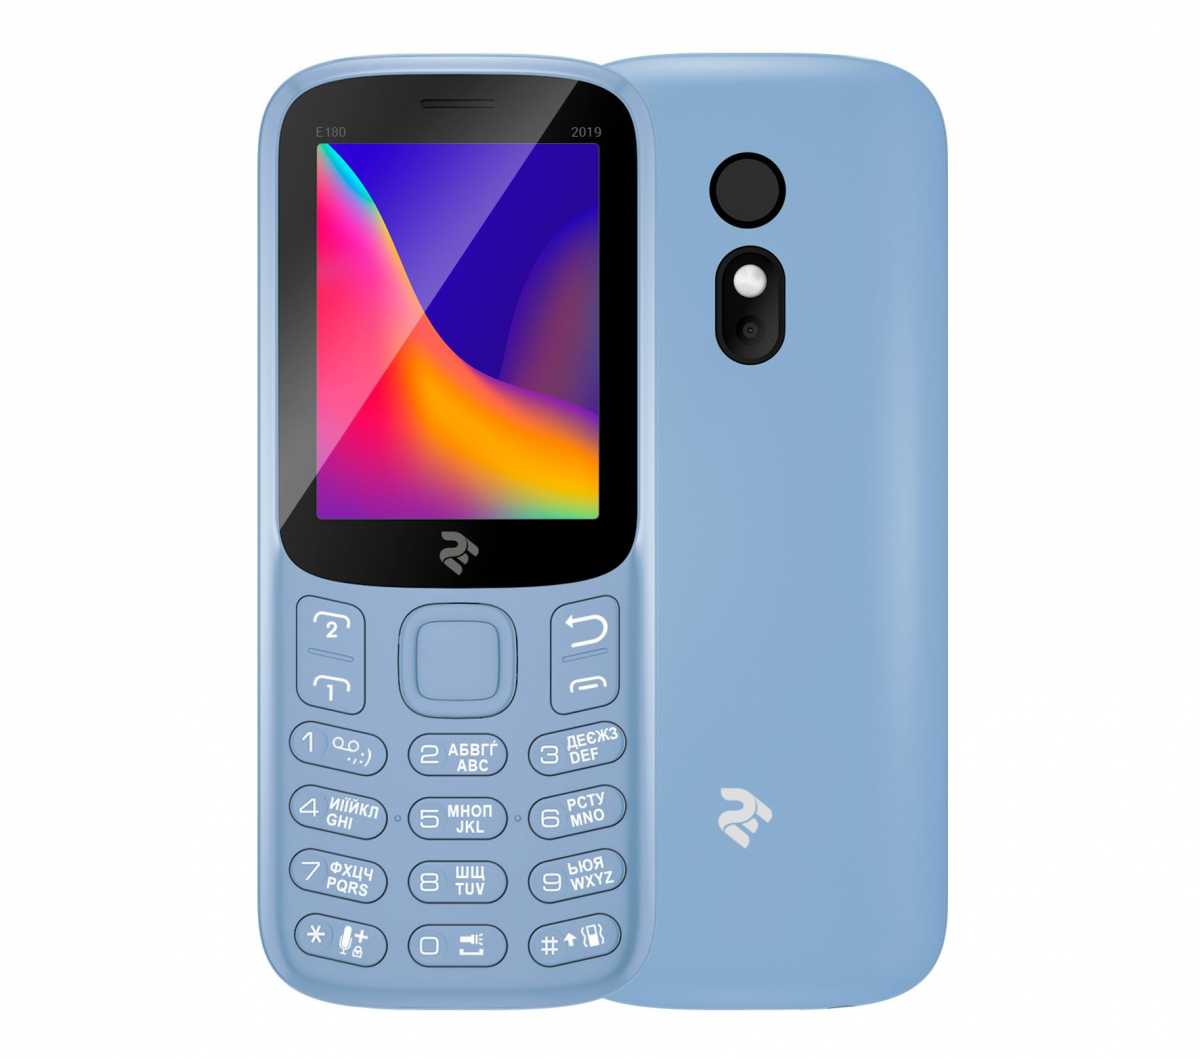 Мобильный телефон 2E E180 2019 DUALSIM City Blue